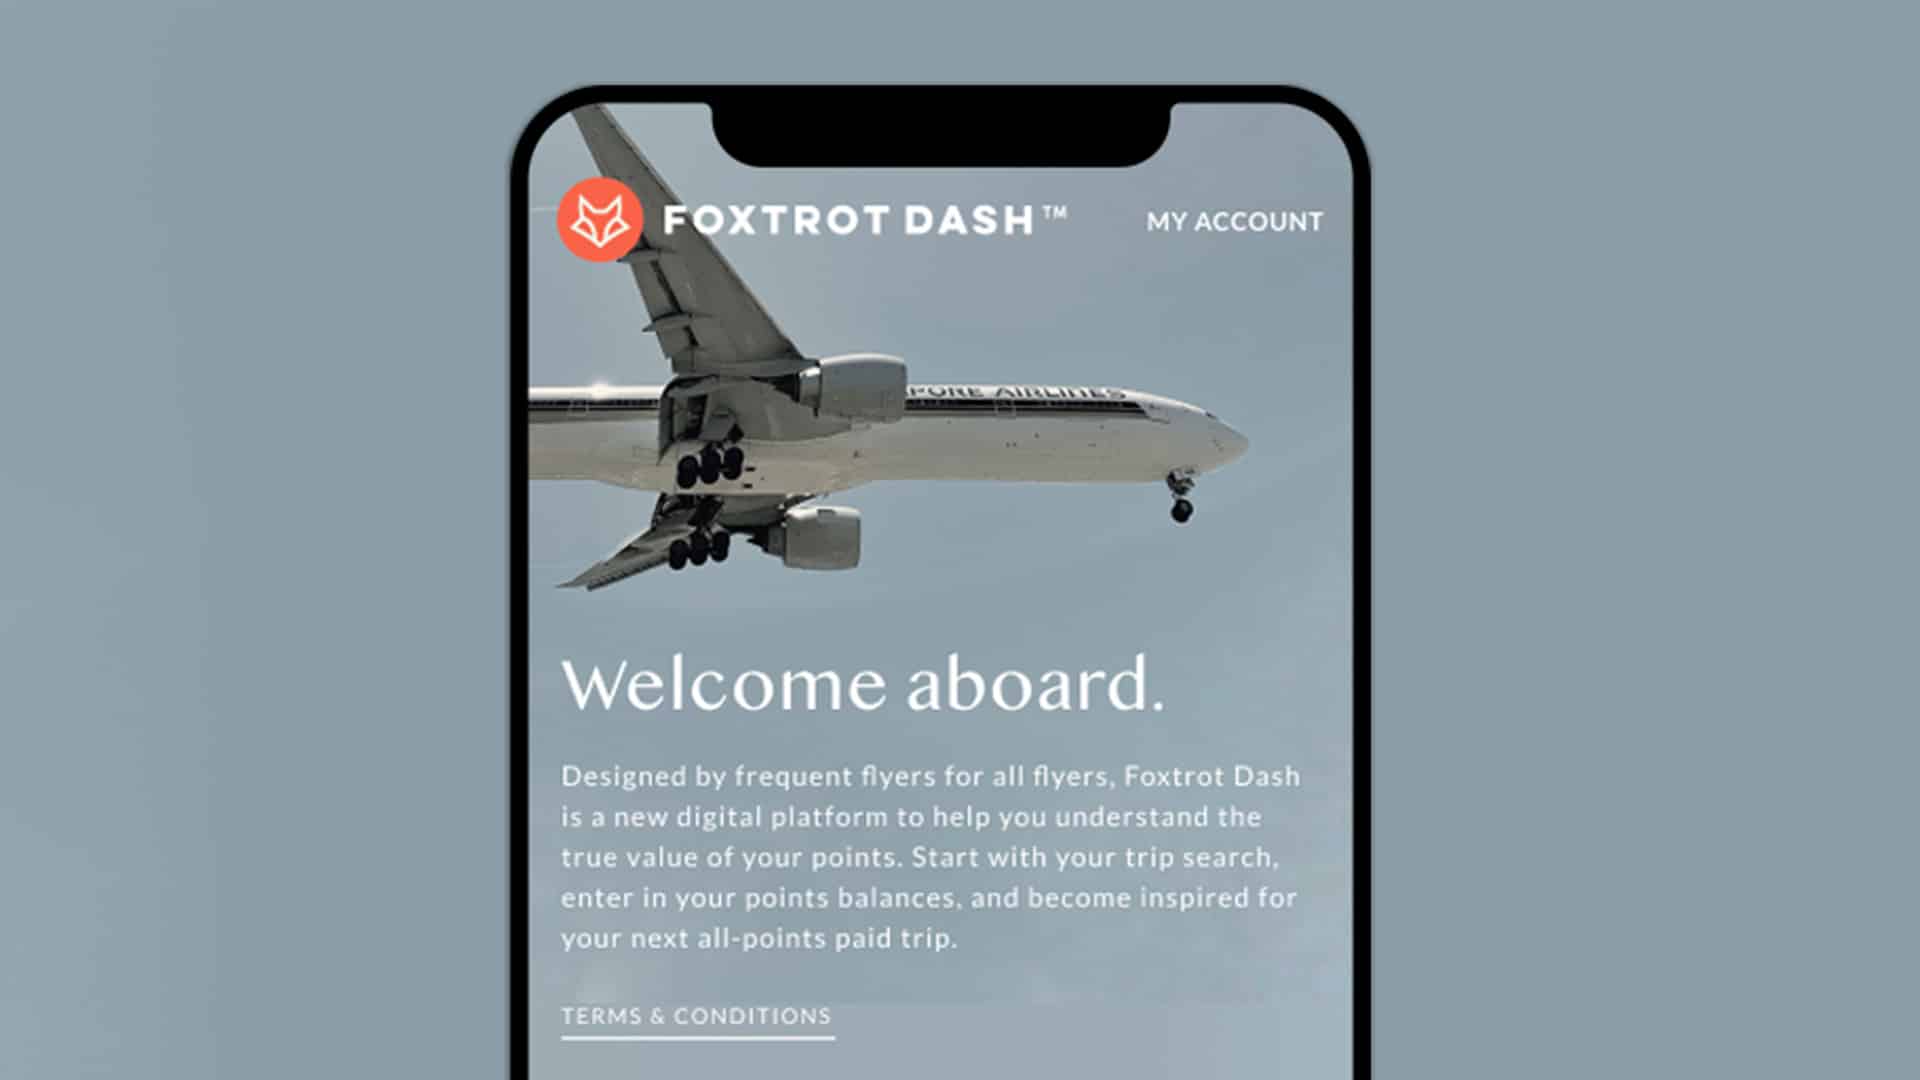 Foxtrot dash app on phone